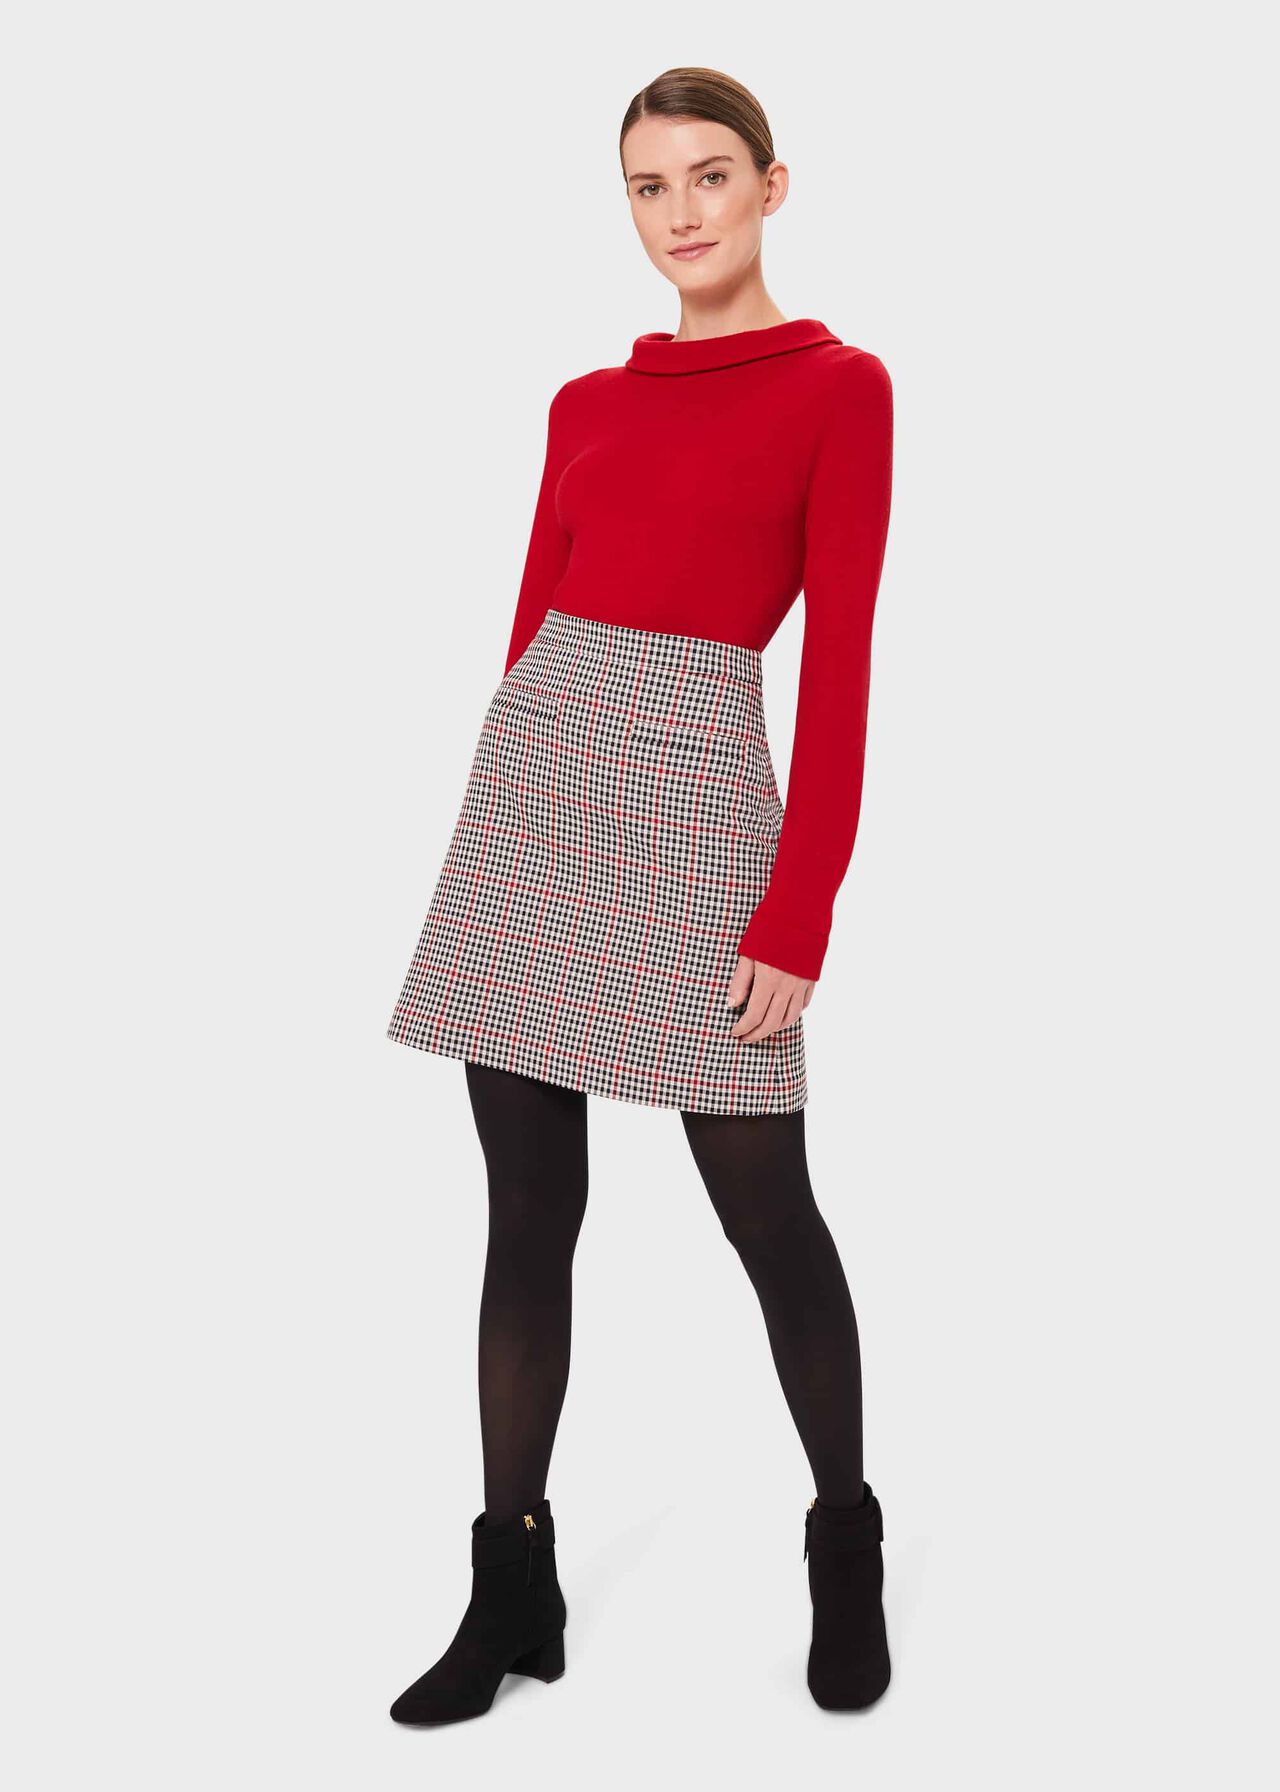 Vanetta Check A Line Skirt, Red Black, hi-res